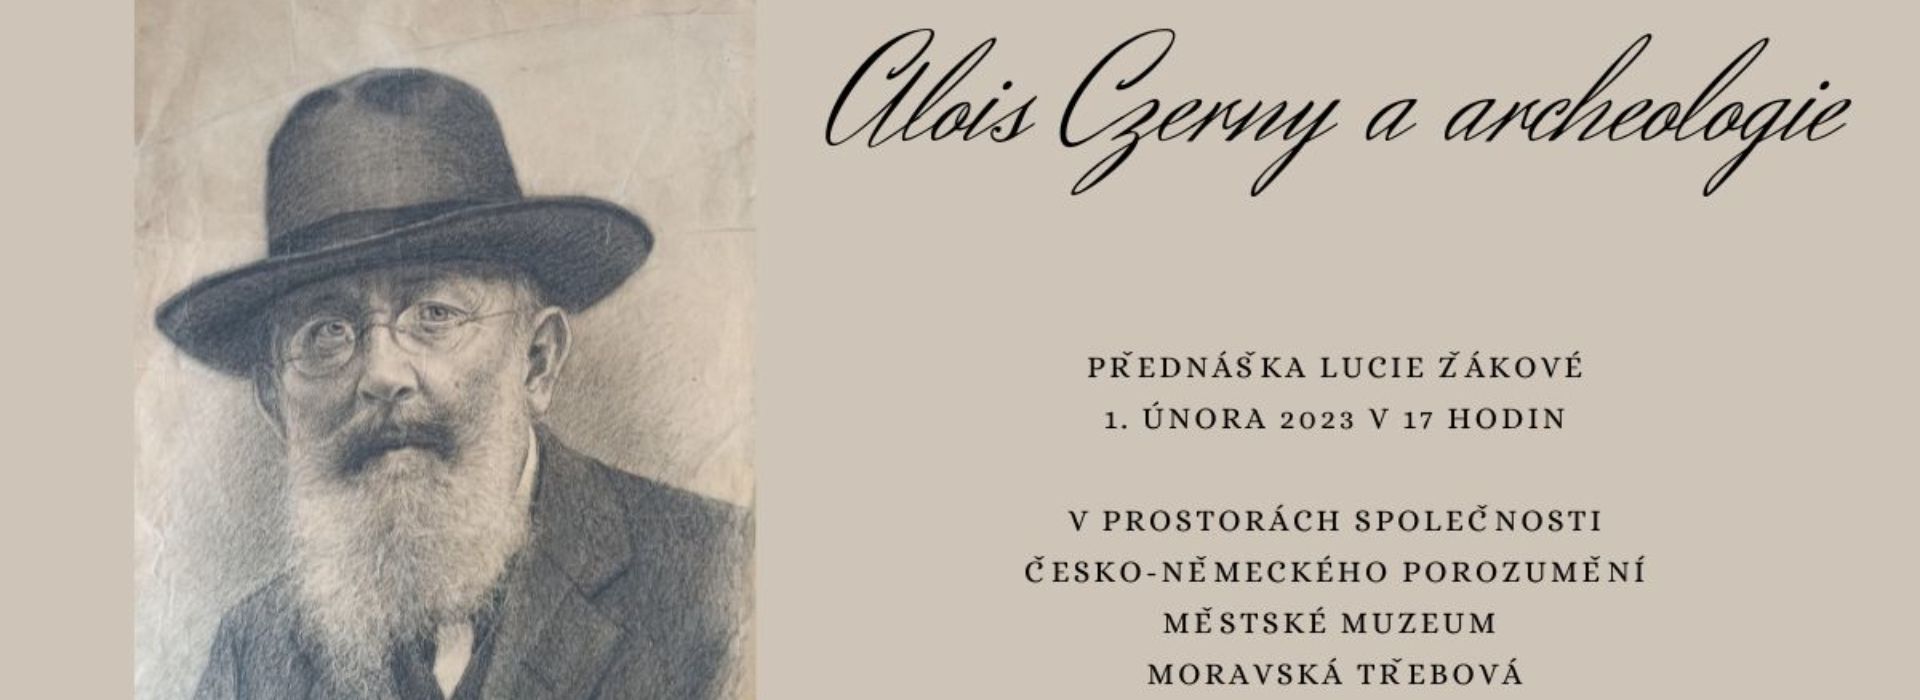 Výstava Alois Czerny a archeologie